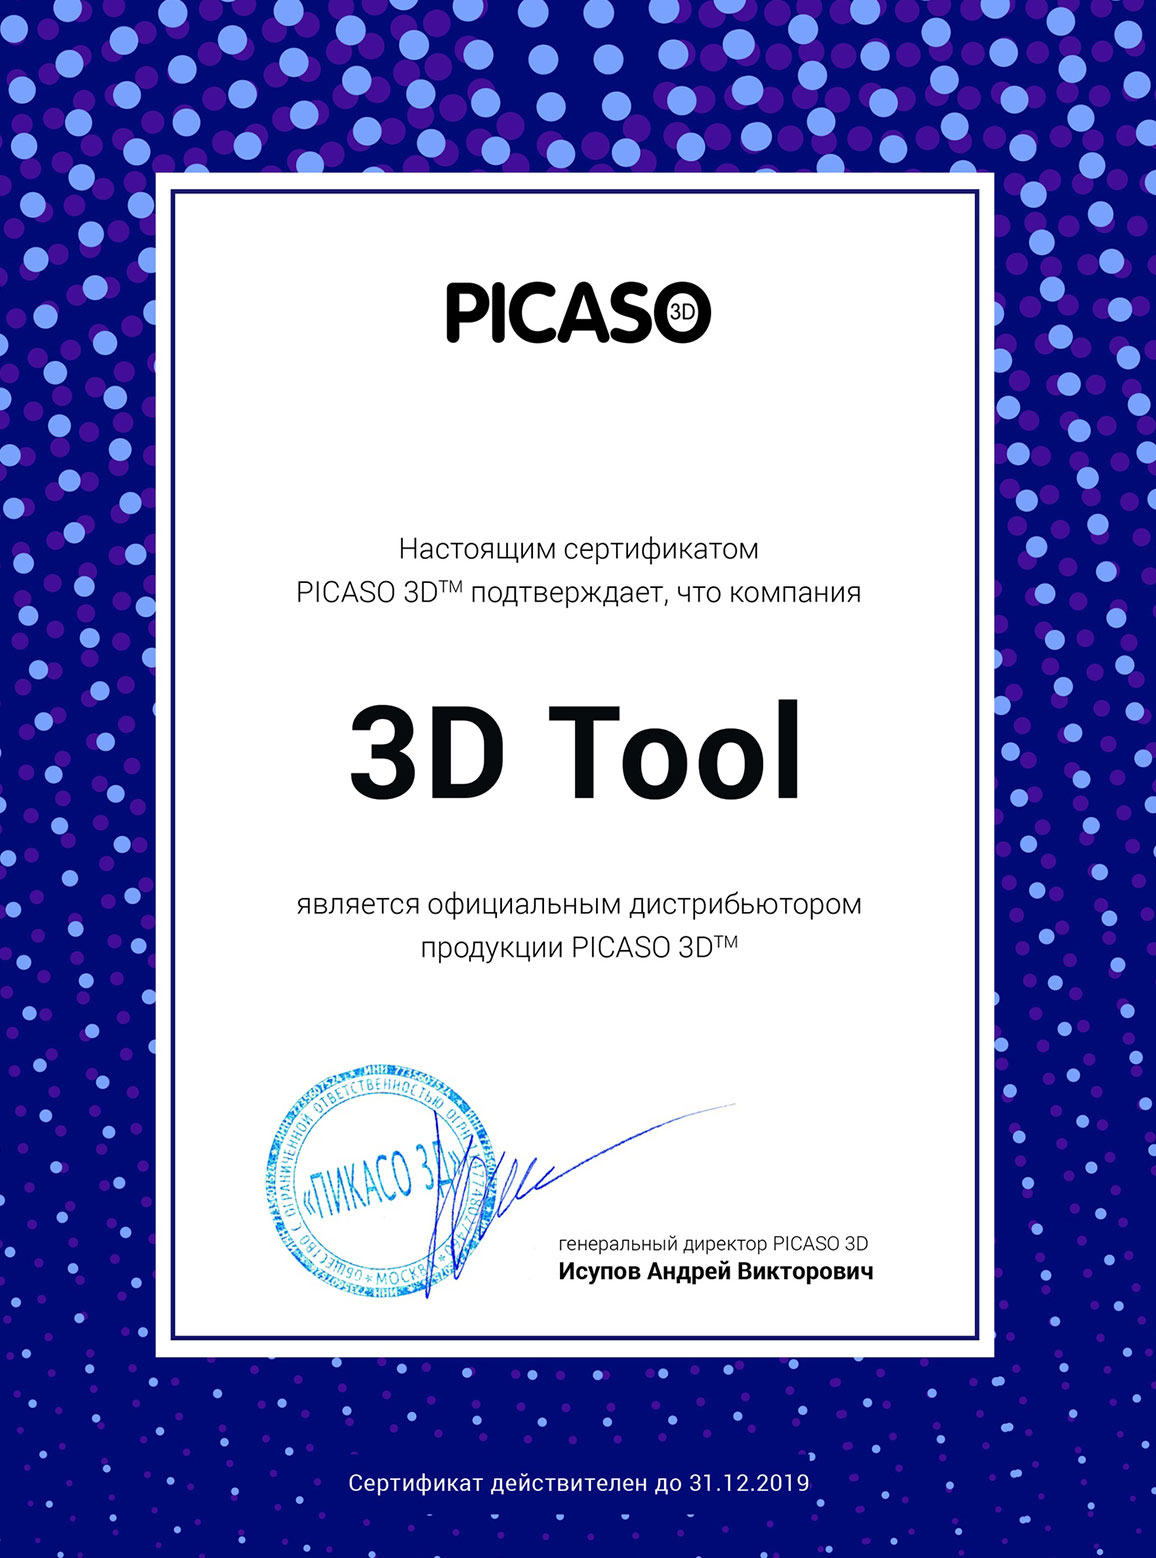 Сертификат Picaso 3D